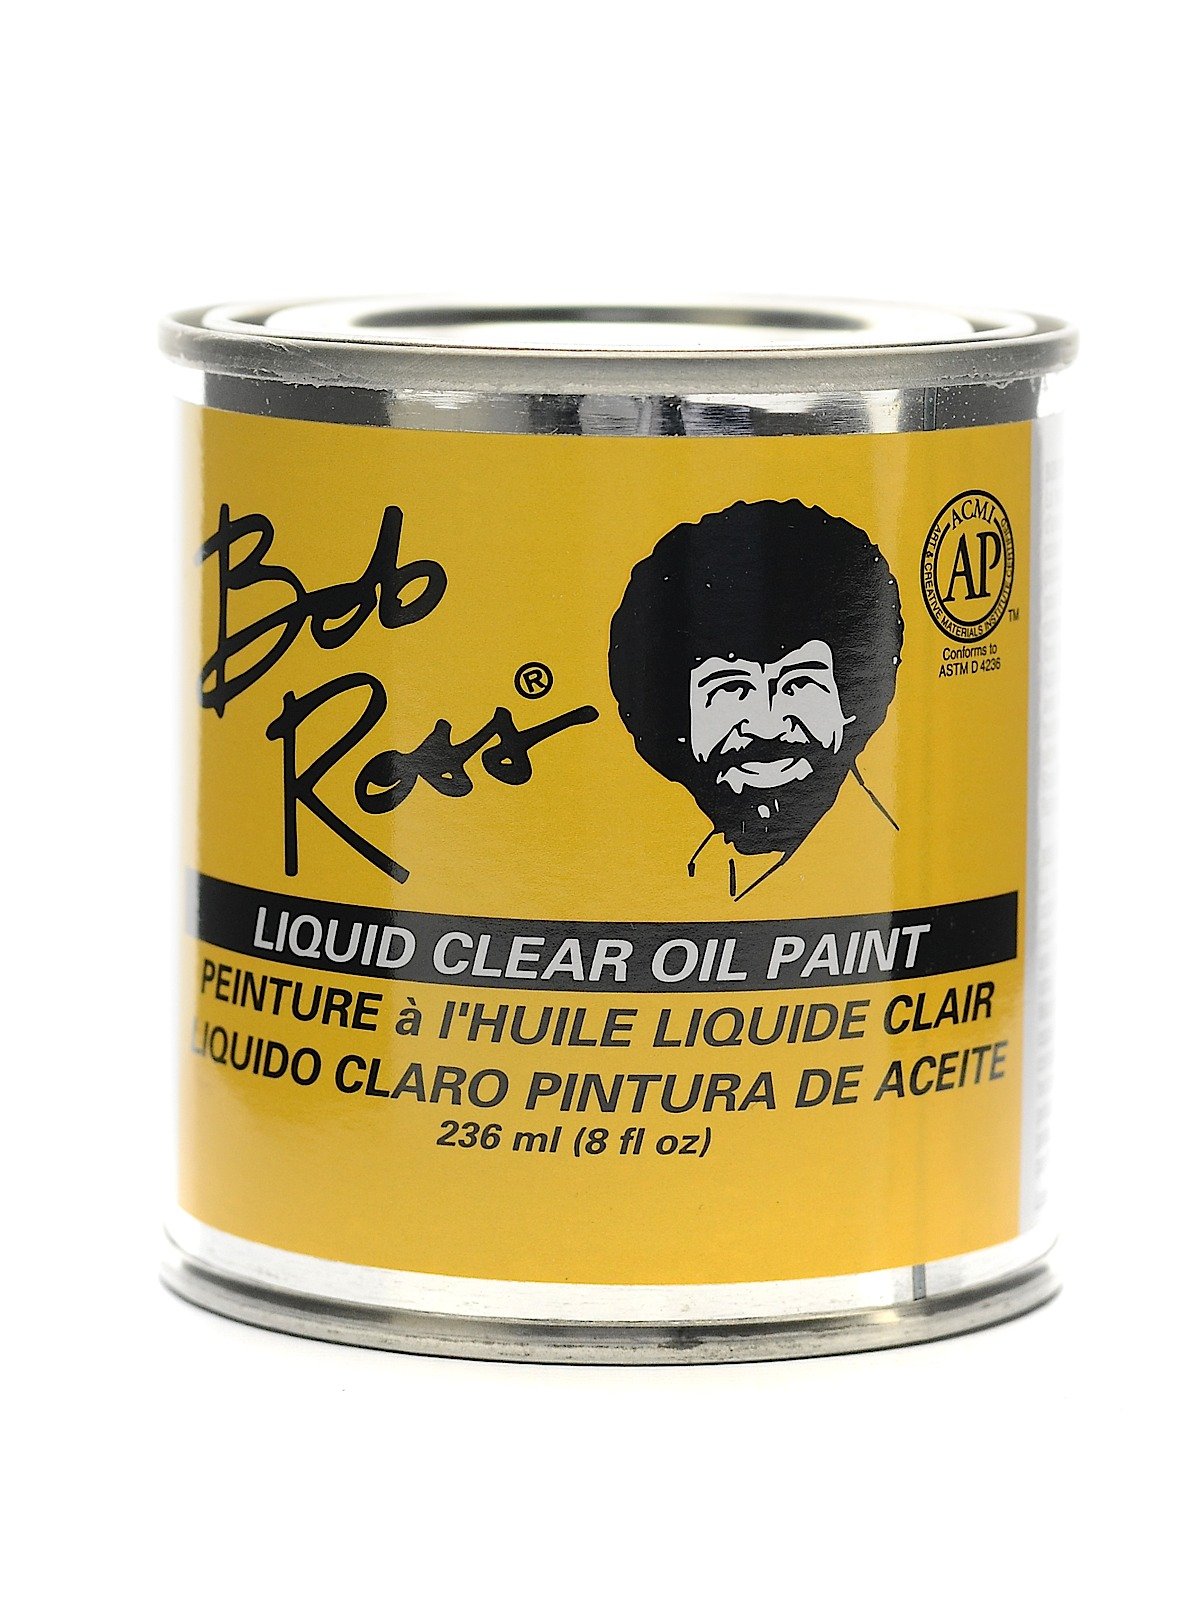 Bob Ross Master Paint Set Artist Bundle - Includes Travel Easel